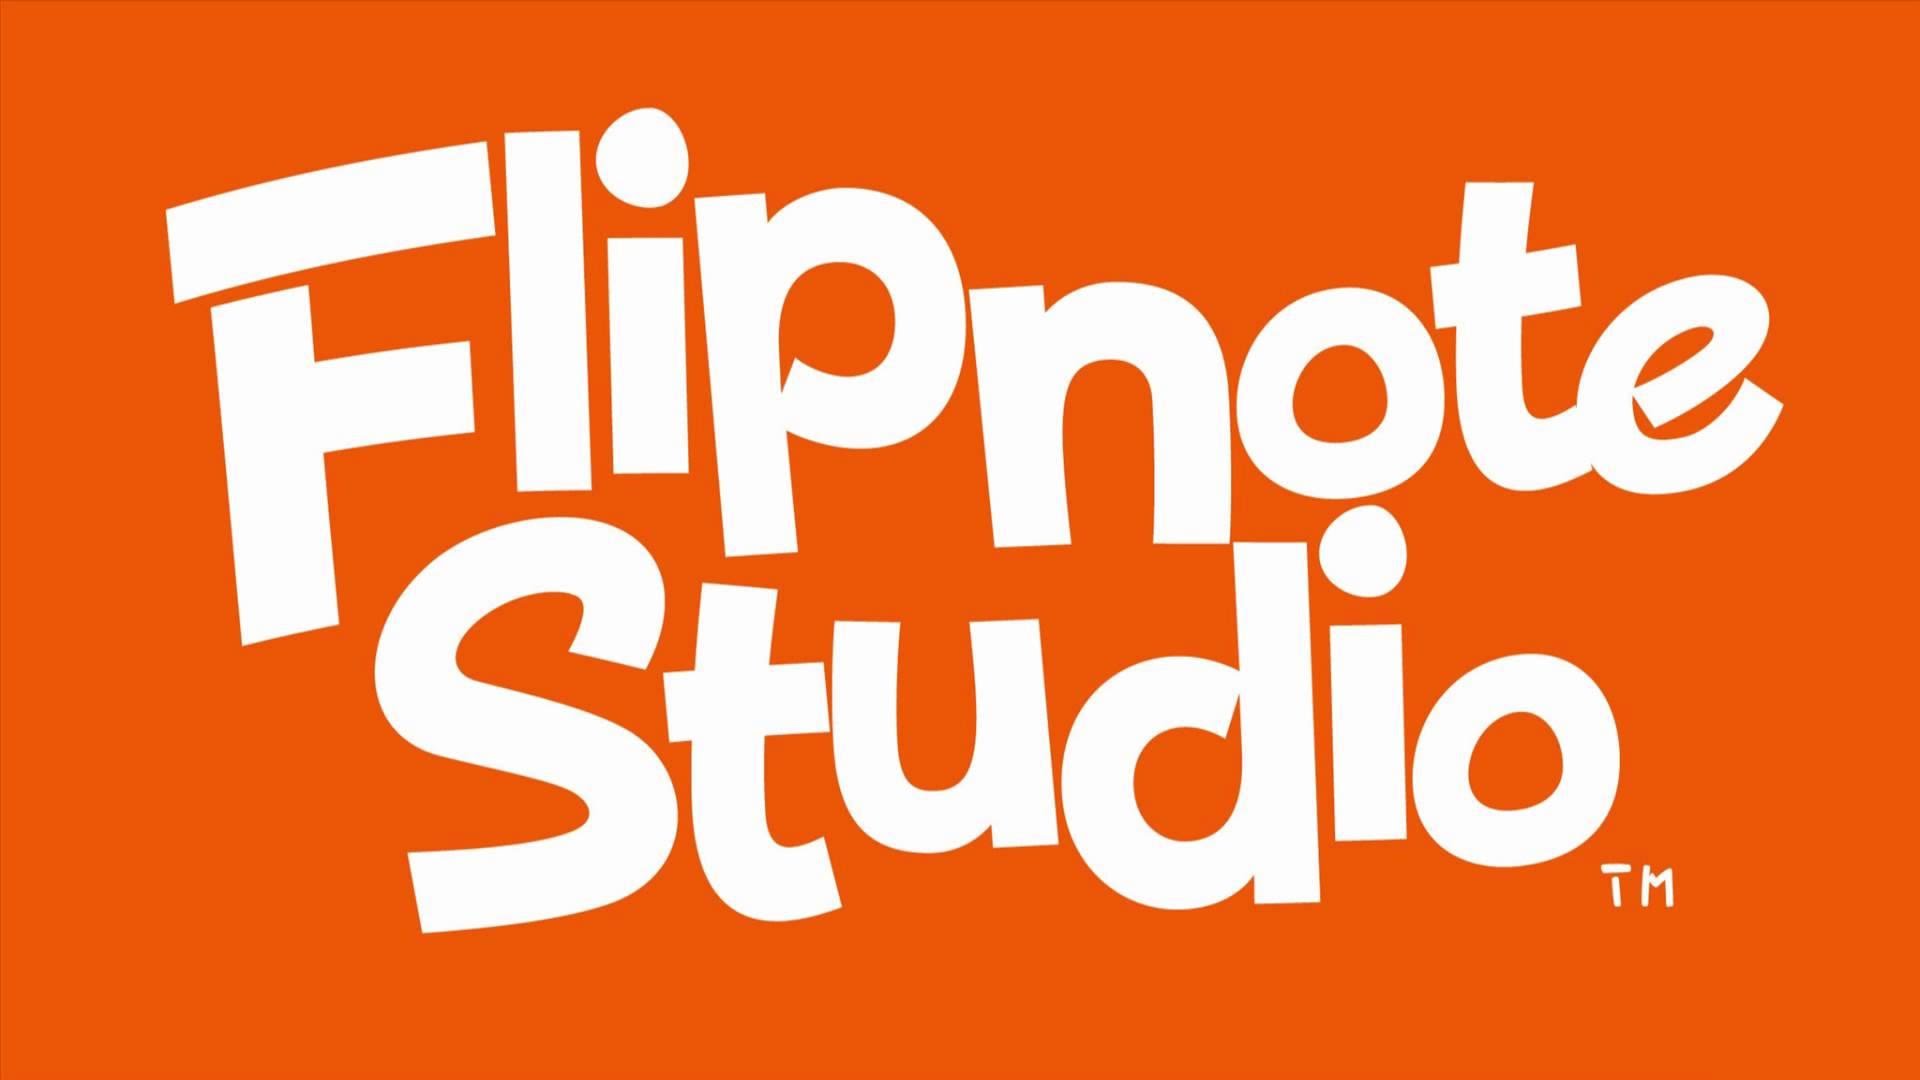 Flipnote studio pc | thottfistare1984's Ownd